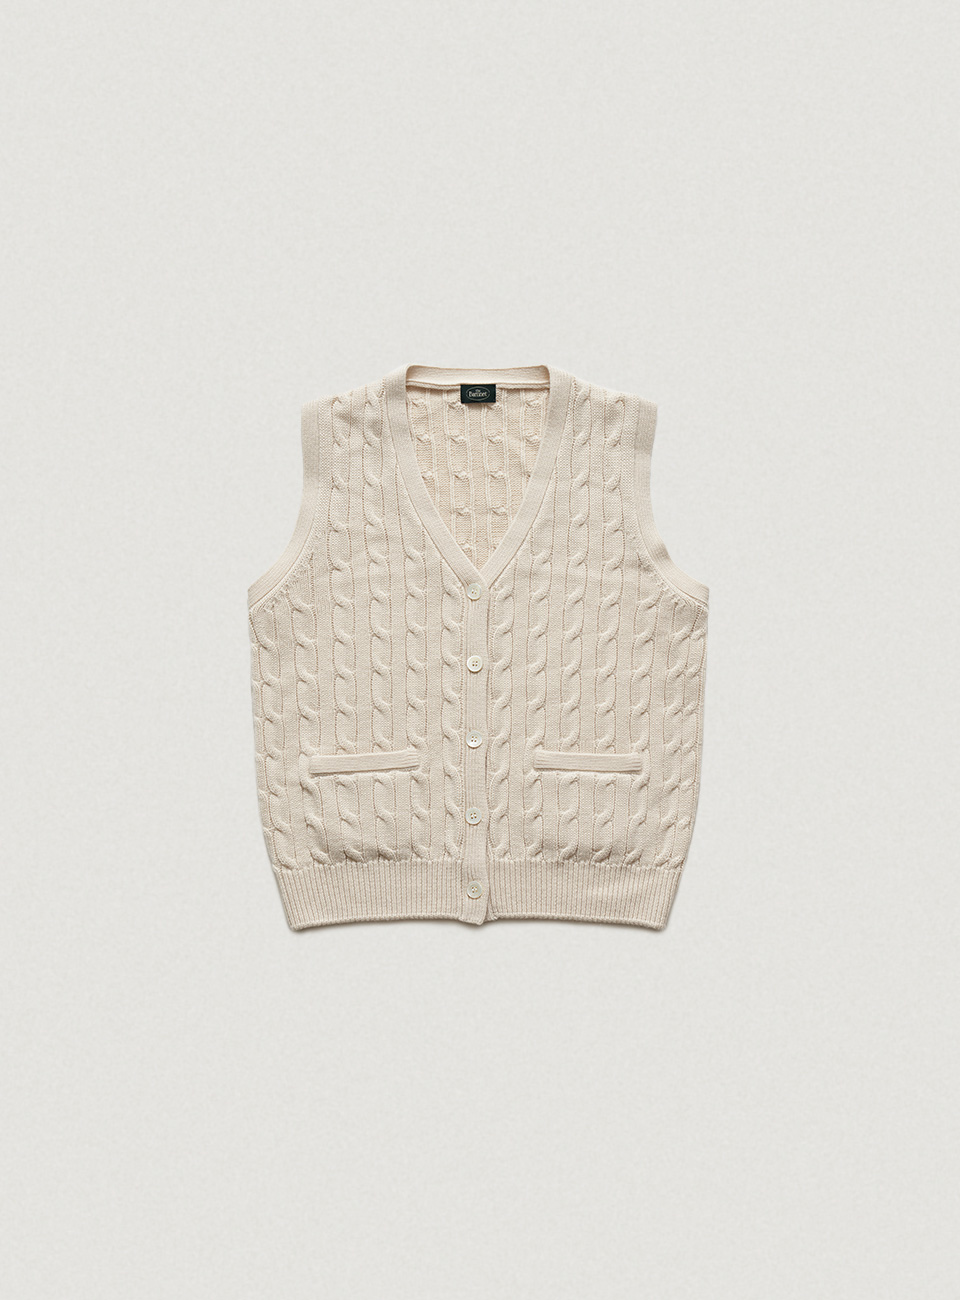 Ivory Anne Cable Knit Cardigan Vest [6월 중순 순차 배송]